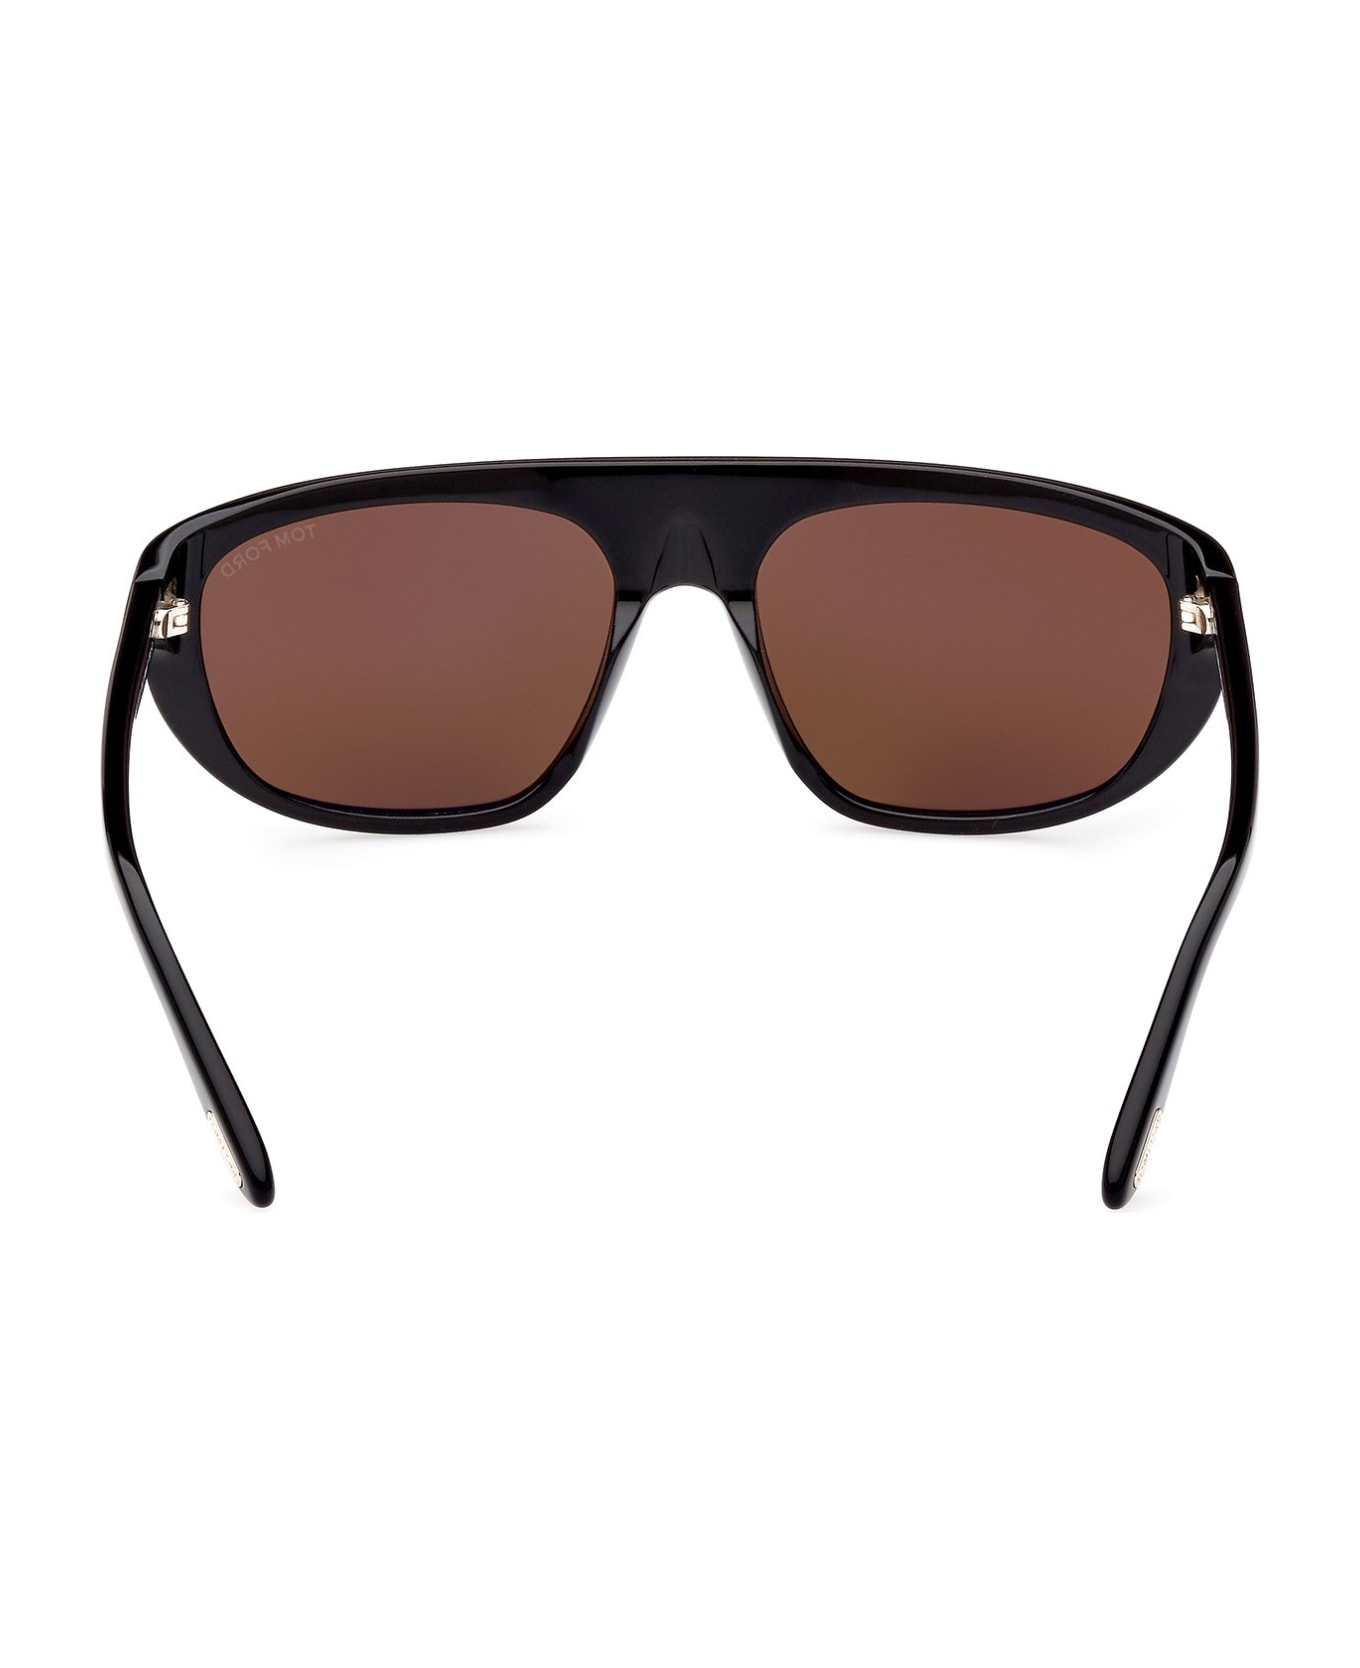 Tom Ford Eyewear Sunglasses Leight - Nero/Marrone